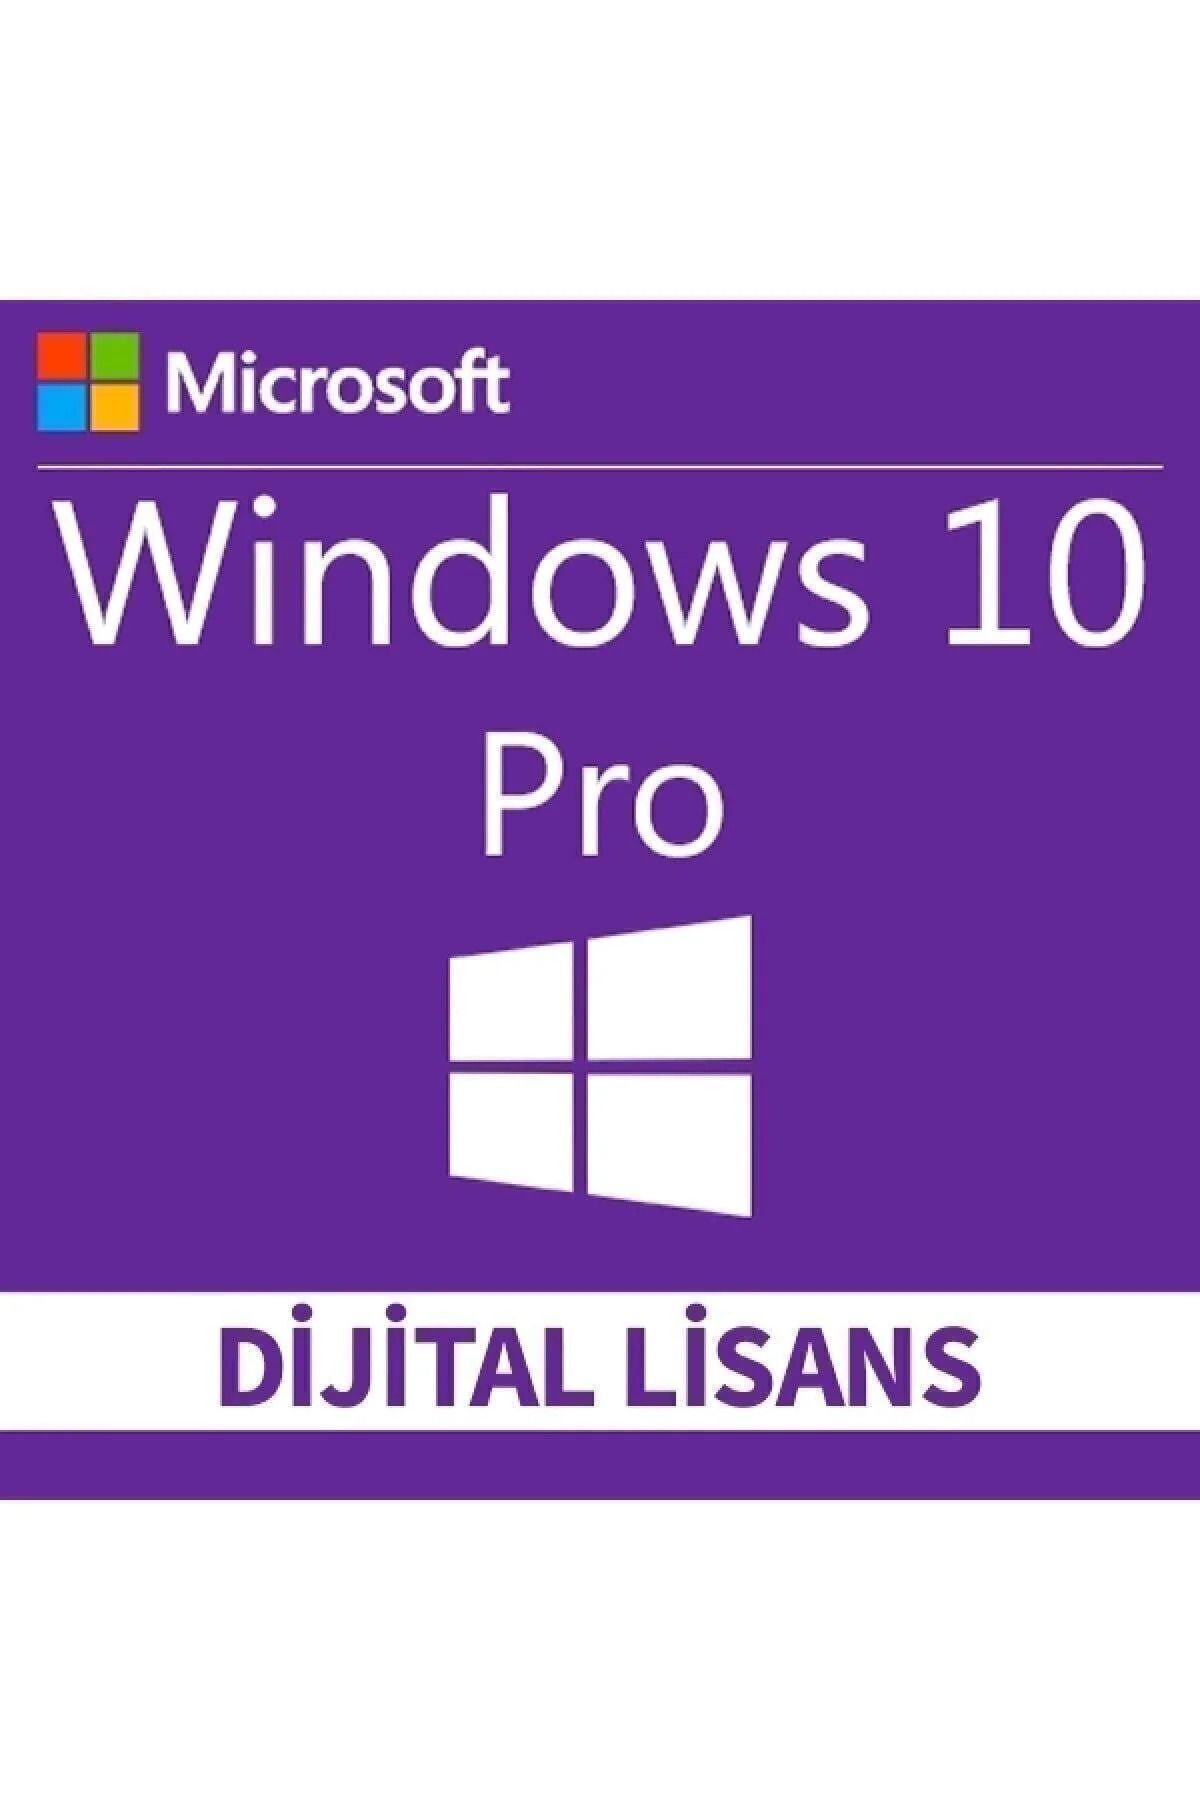 Microsoft Microsoft Windows 10 Pro 32/64bit Esd Dijital Lisans